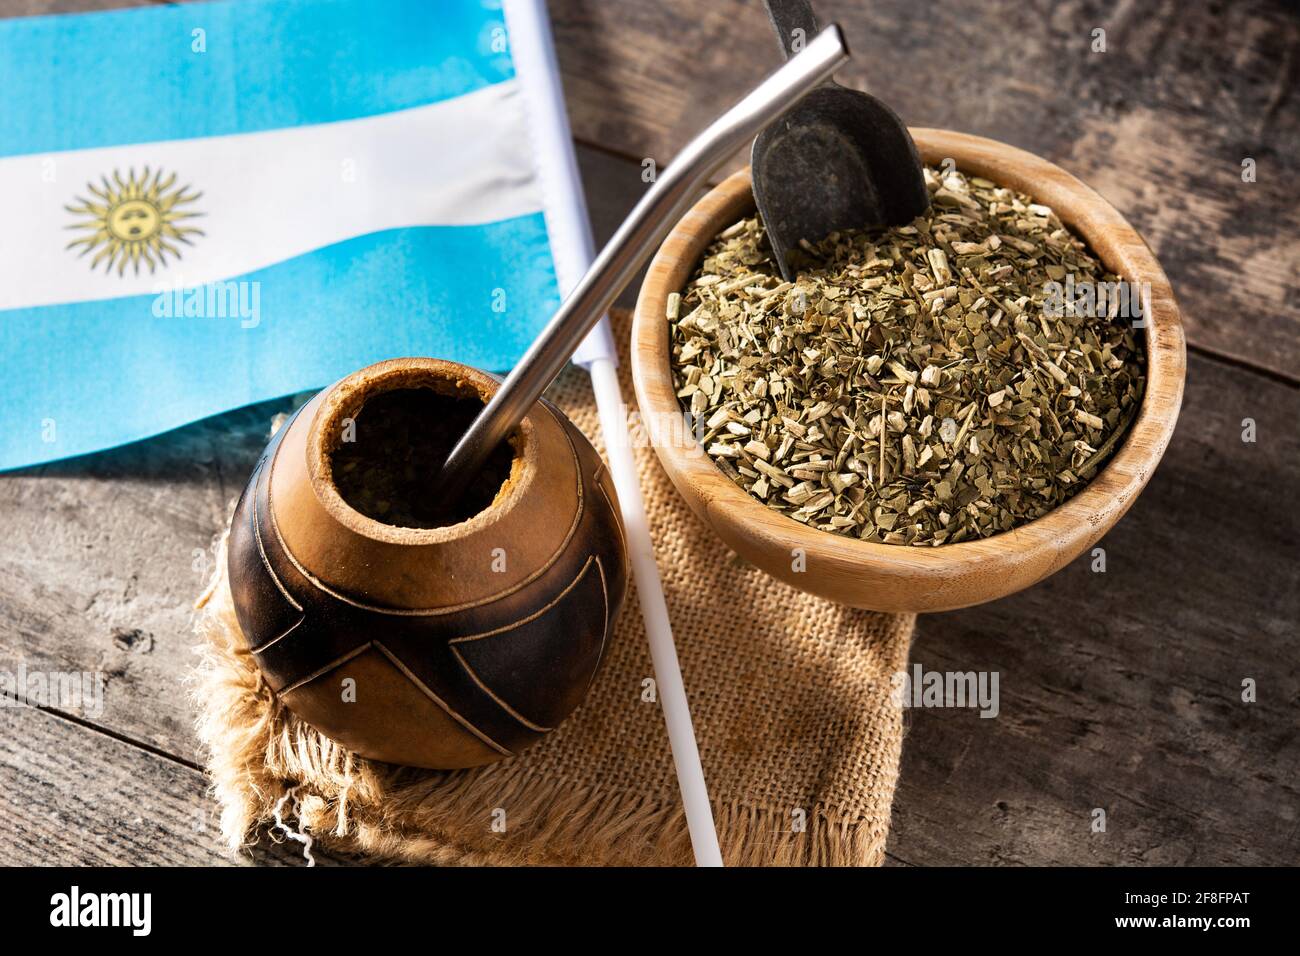 Mate argentina fotografías e imágenes de alta resolución - Alamy